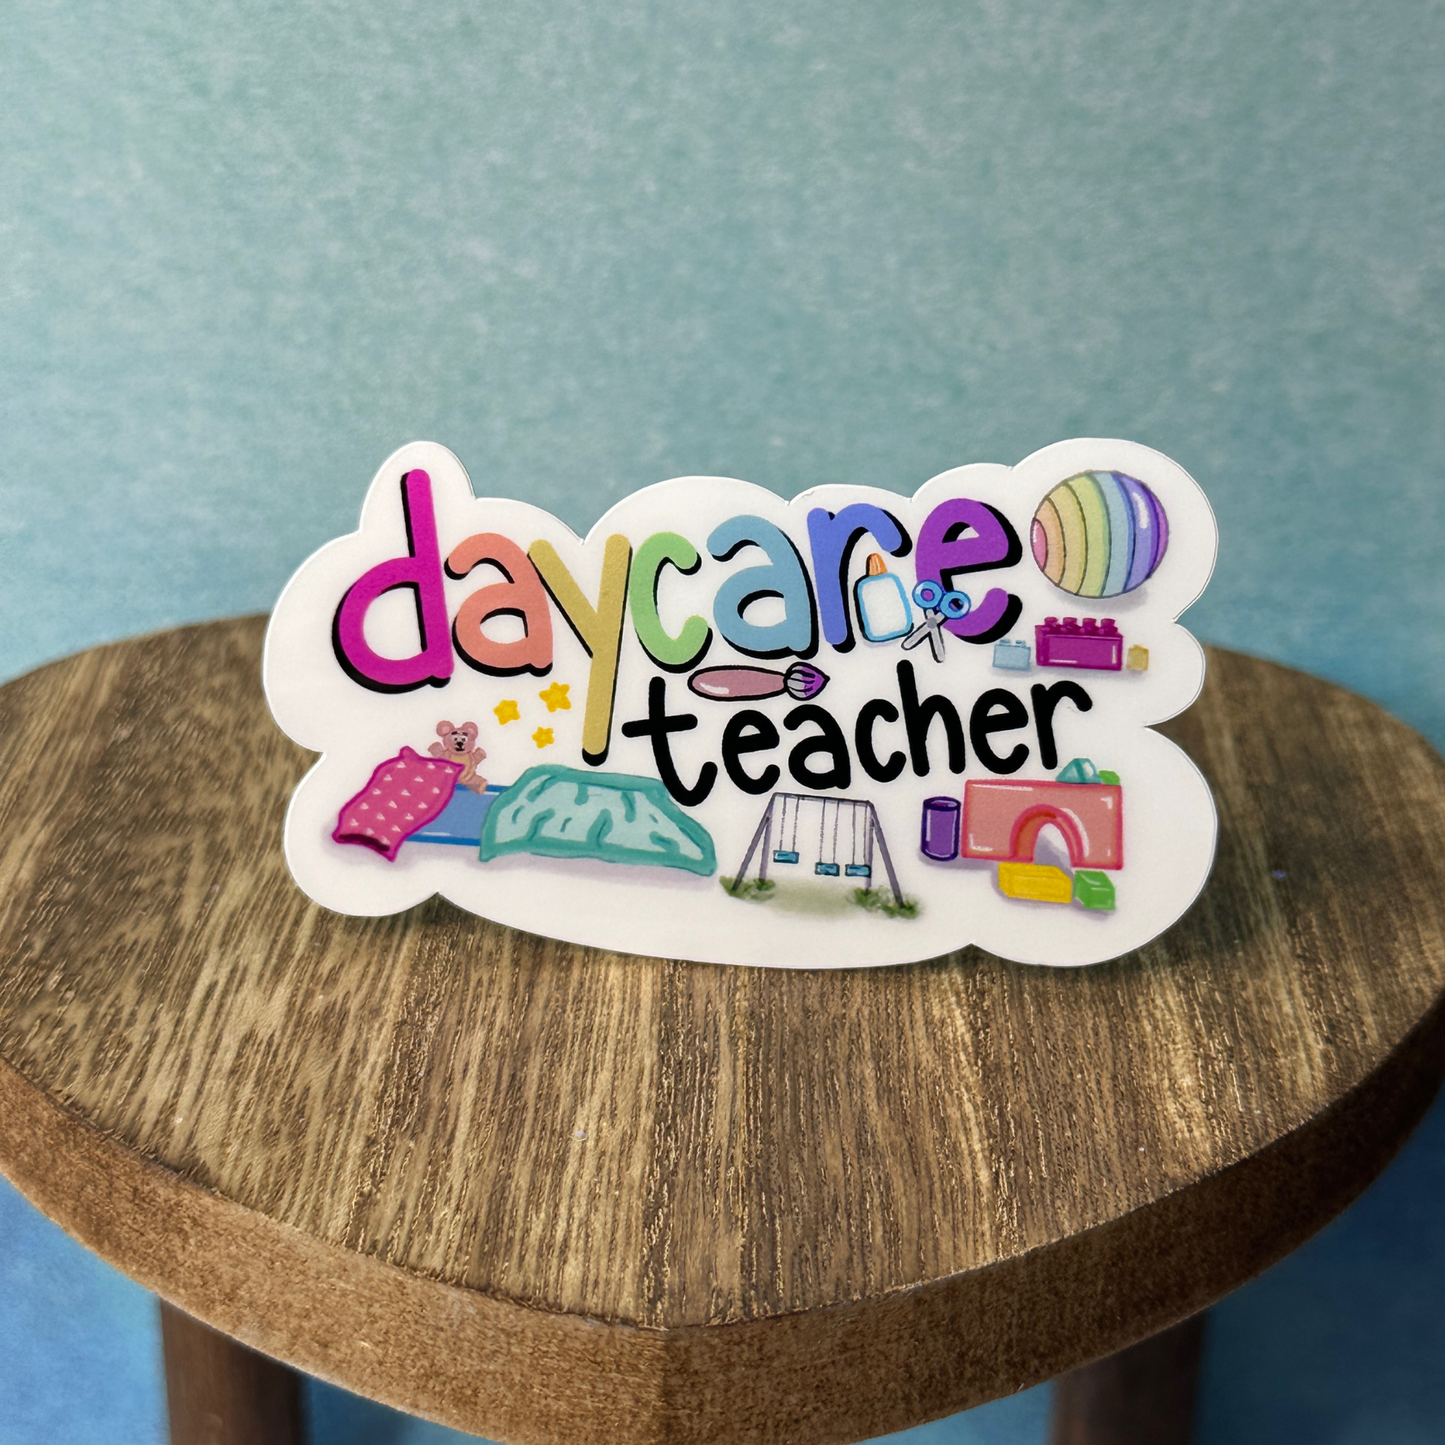 Daycare Teacher Tumbler, Laptop, Phone Case Sticker